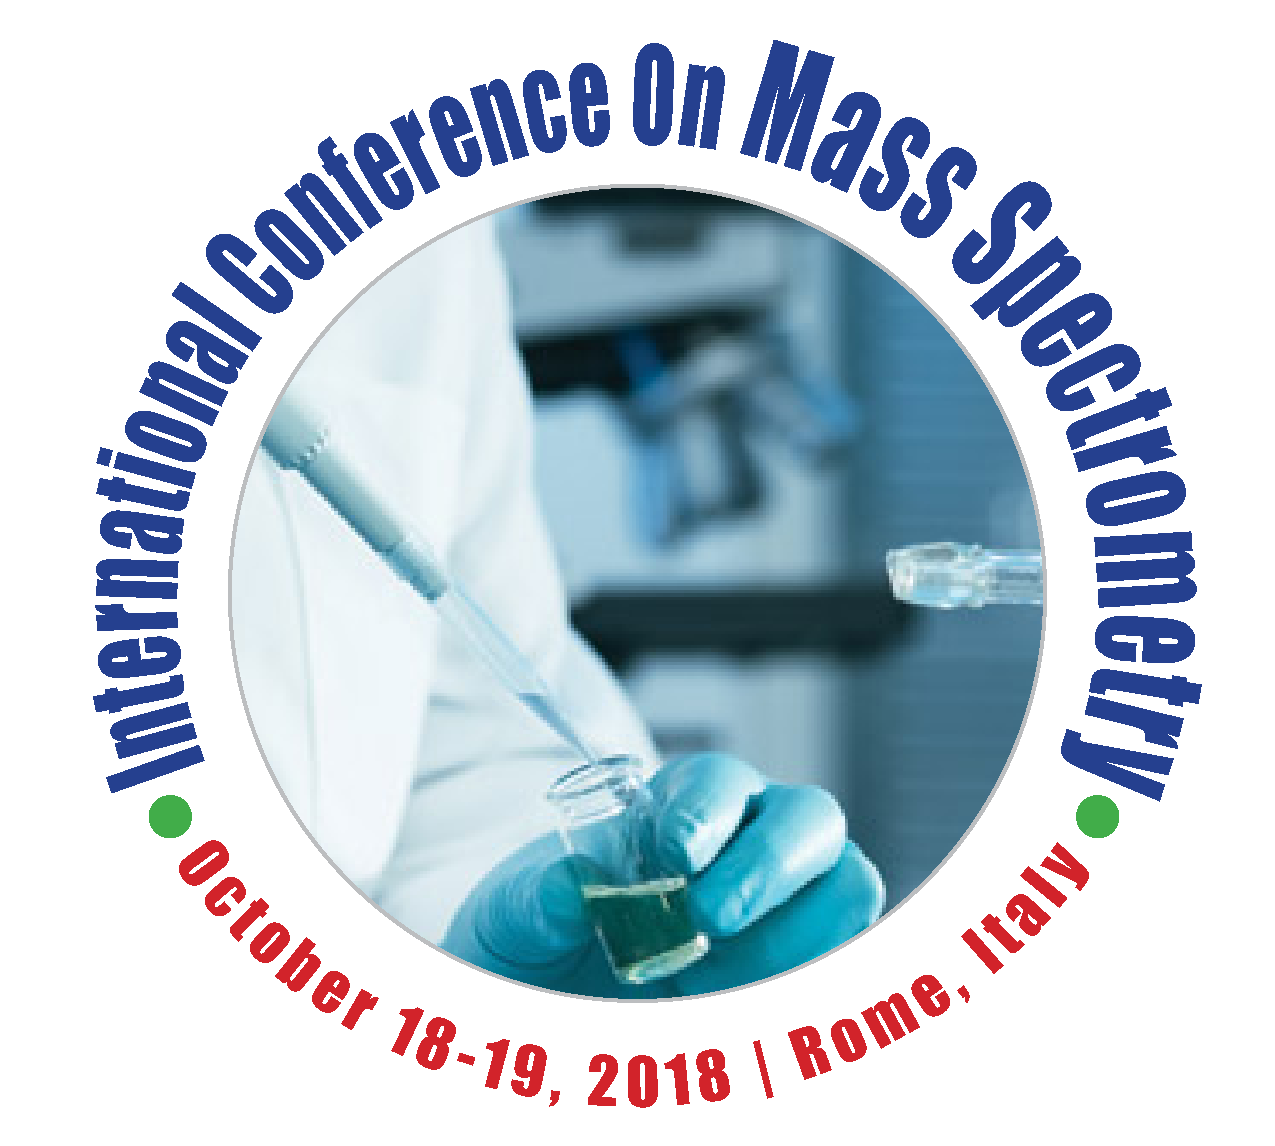 International conference on Mass spectrometry 